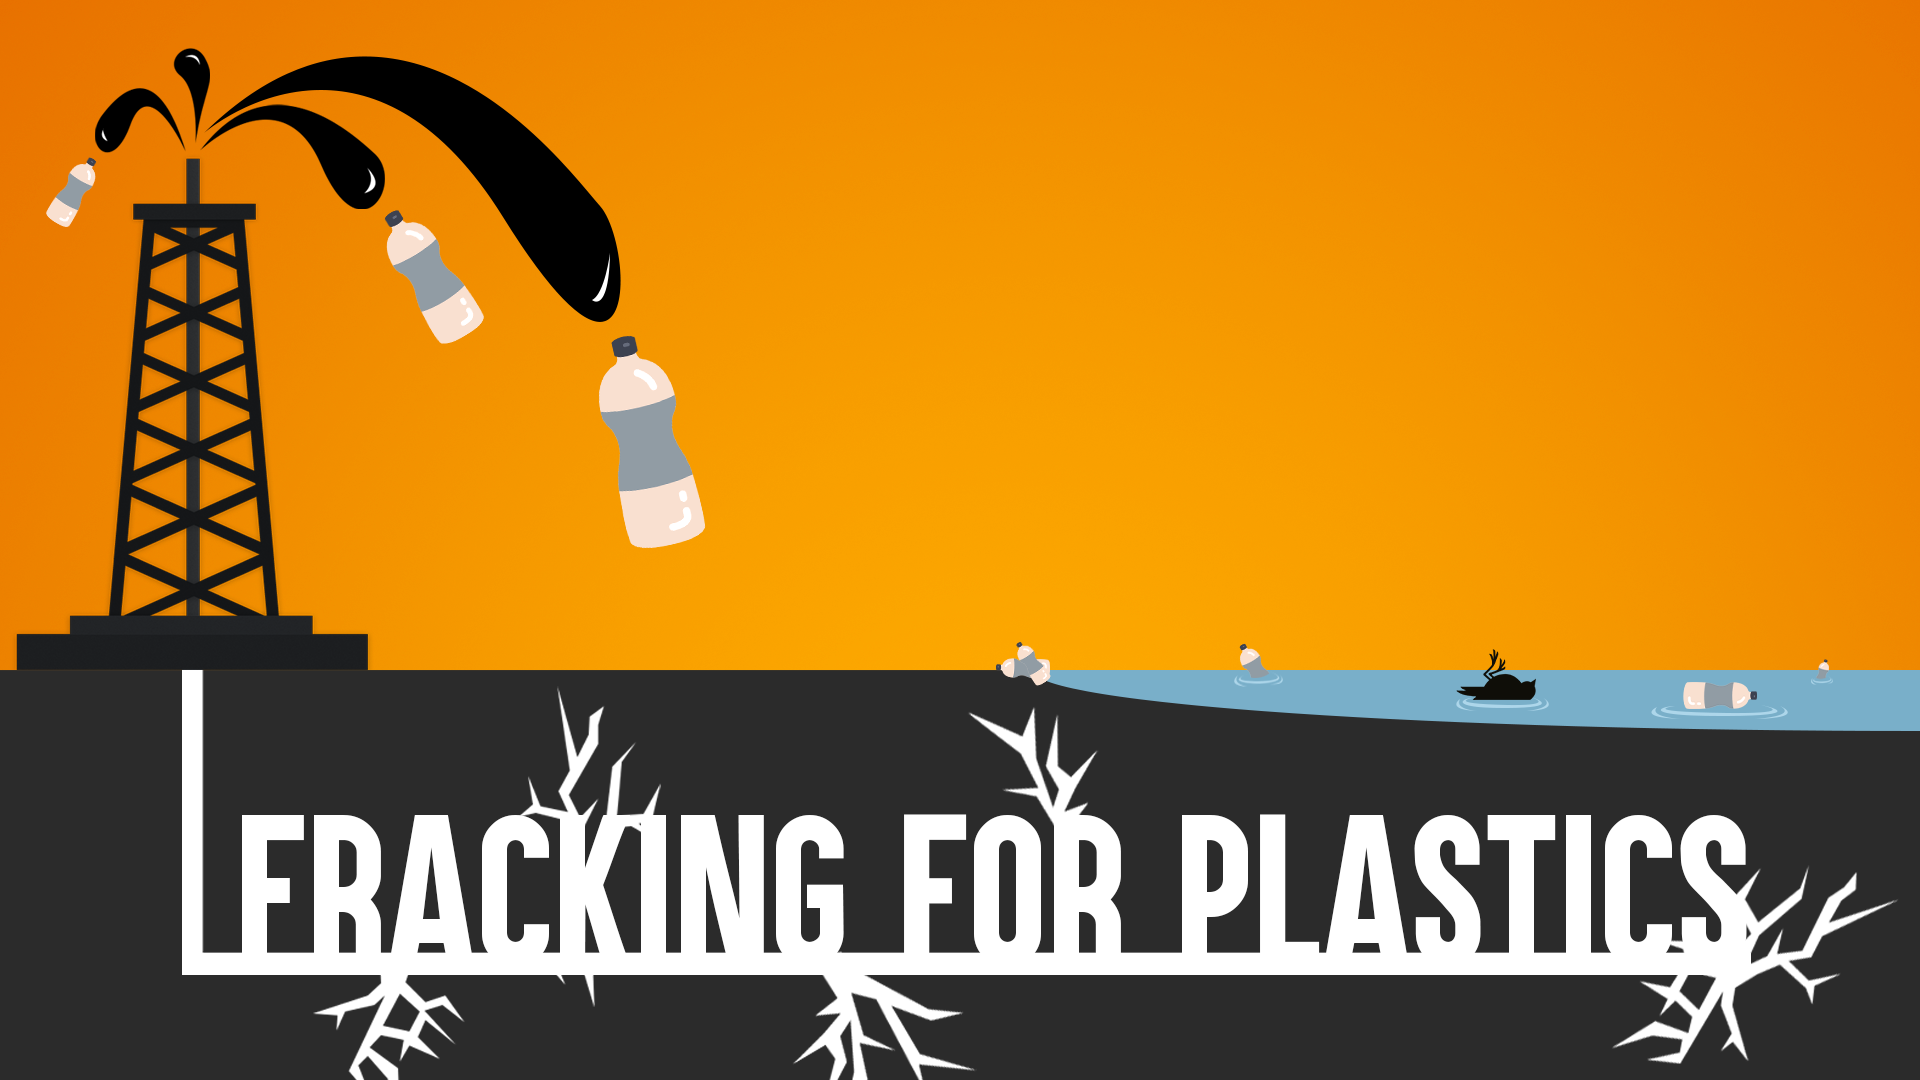 Fracking for Plastics graphic showing oil rig, plastic bottles, and dead bird